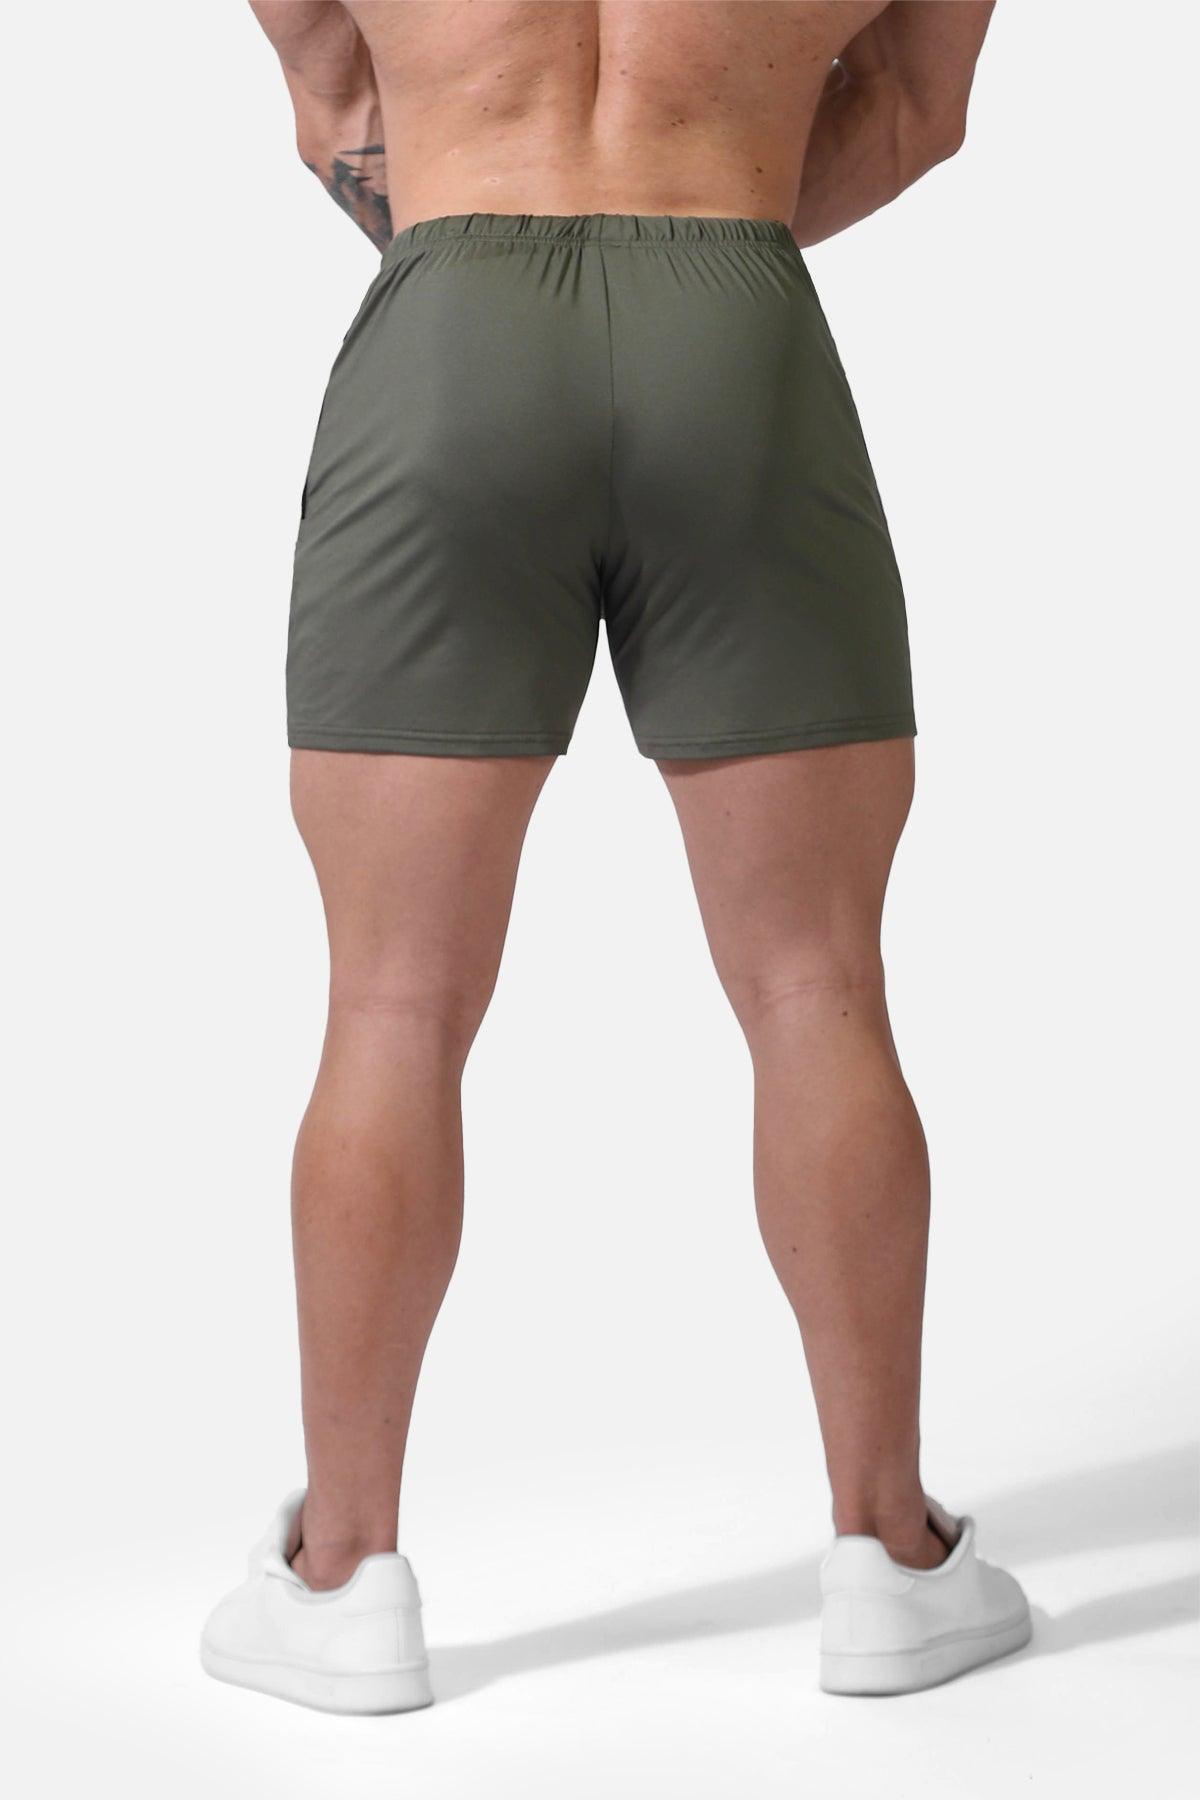 Agile Bodybuilding 4'' Shorts w Zipper Pockets - Navy Blue